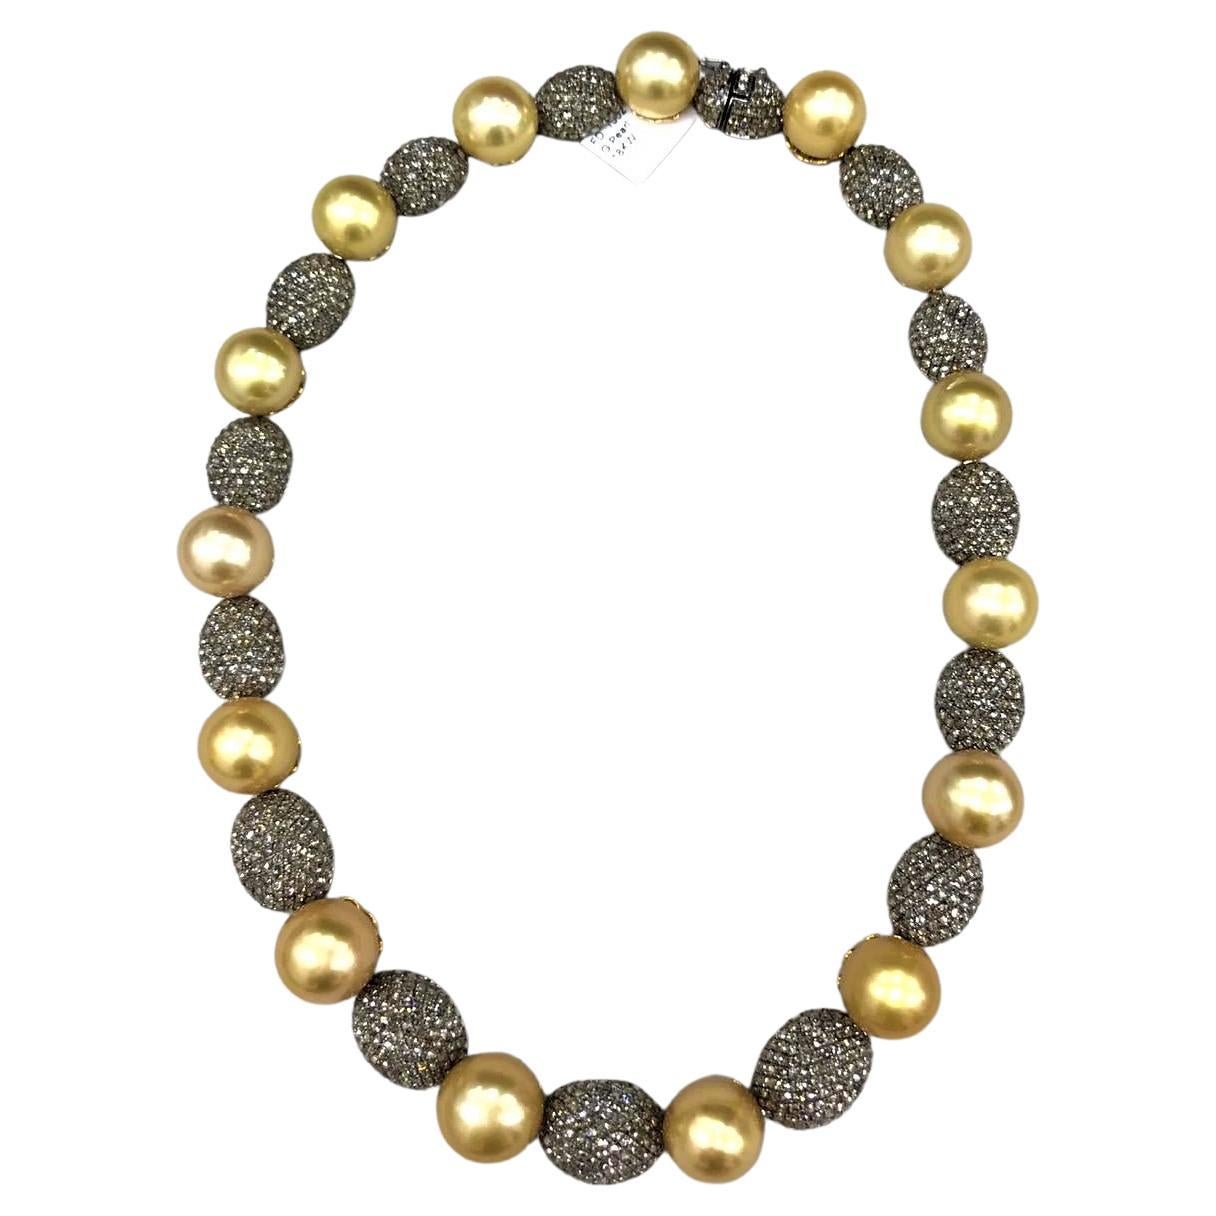 NWT $75, 850 Gorgeous 18KT South Sea Golden Pearl Fancy Cognac Diamond Necklace